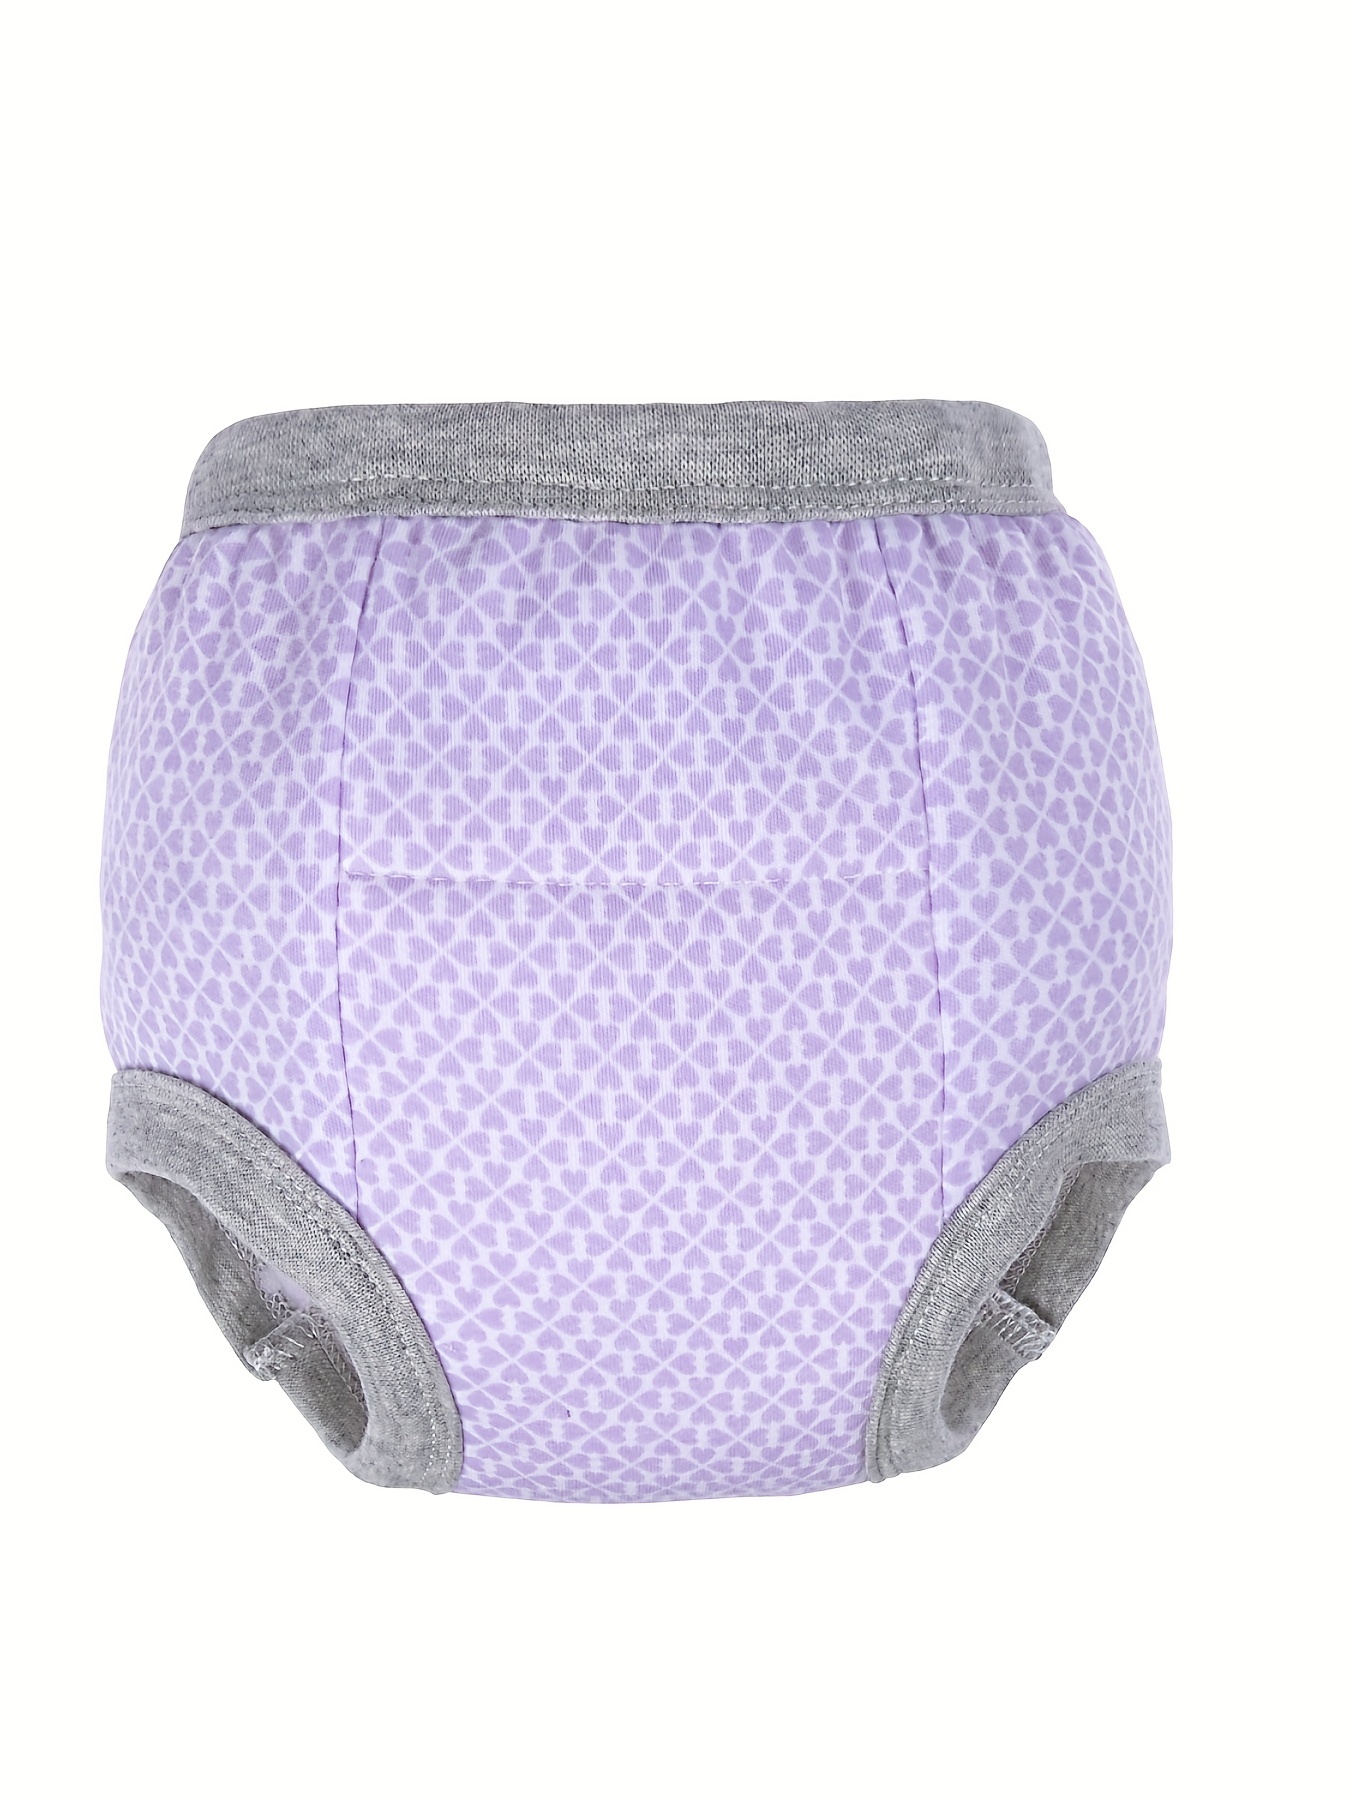 Big elephant Baby Boys'6 Pack Toddler Potty Training Pants 100% Cotton  Waterproof Underpants no Shoptime